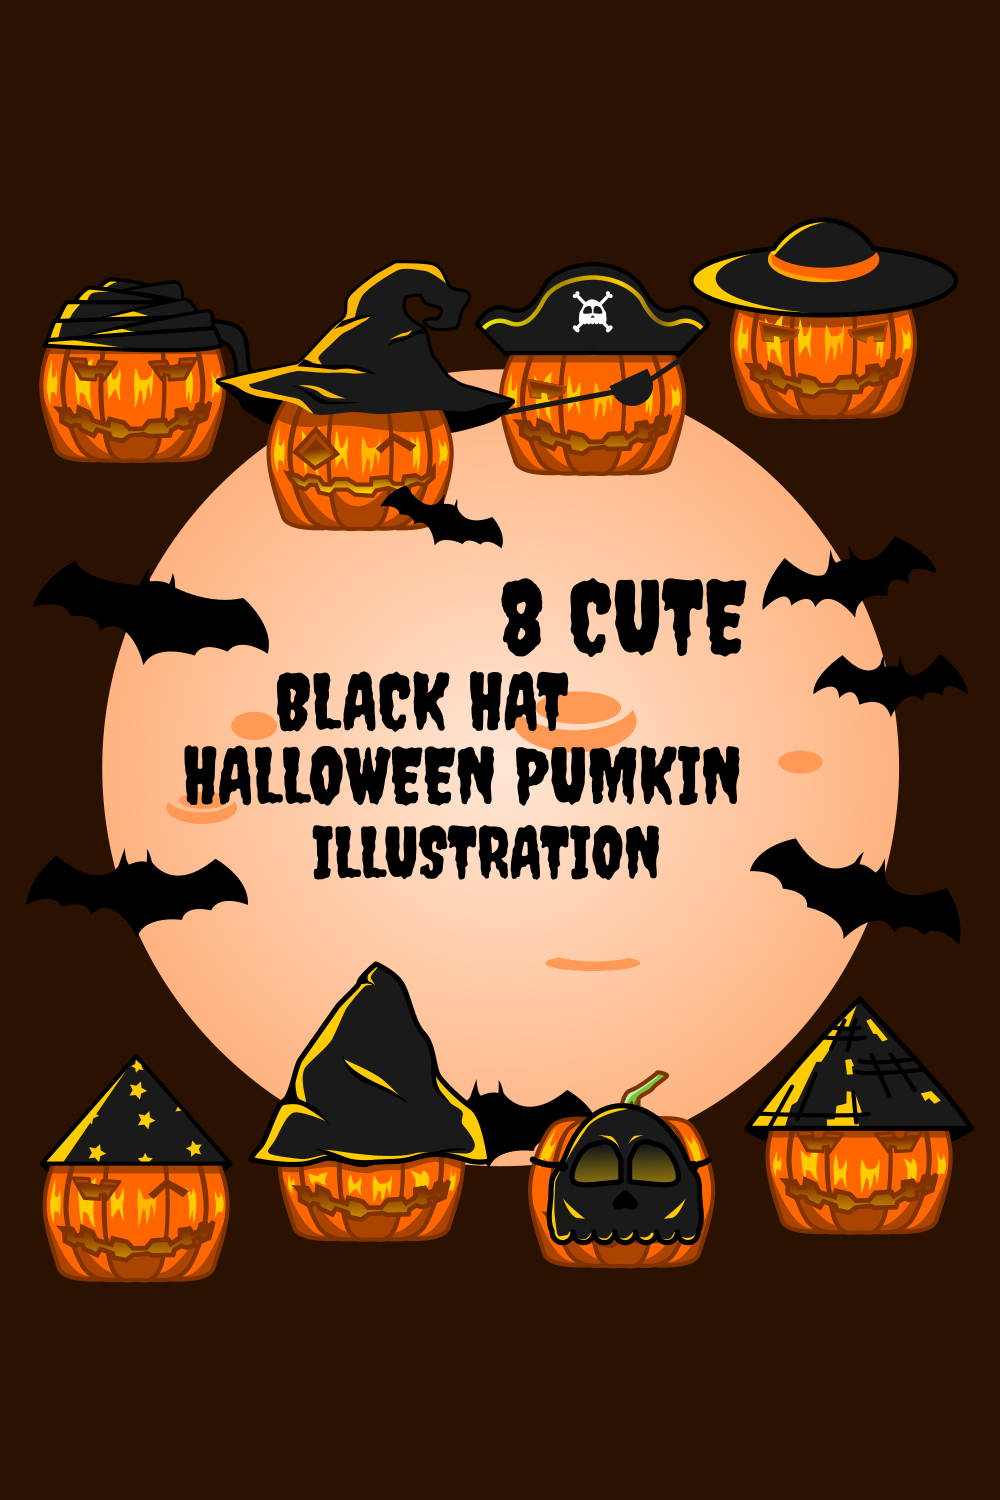 8 Cute Black Hat Halloween Pumkin - Pinterest image preview.